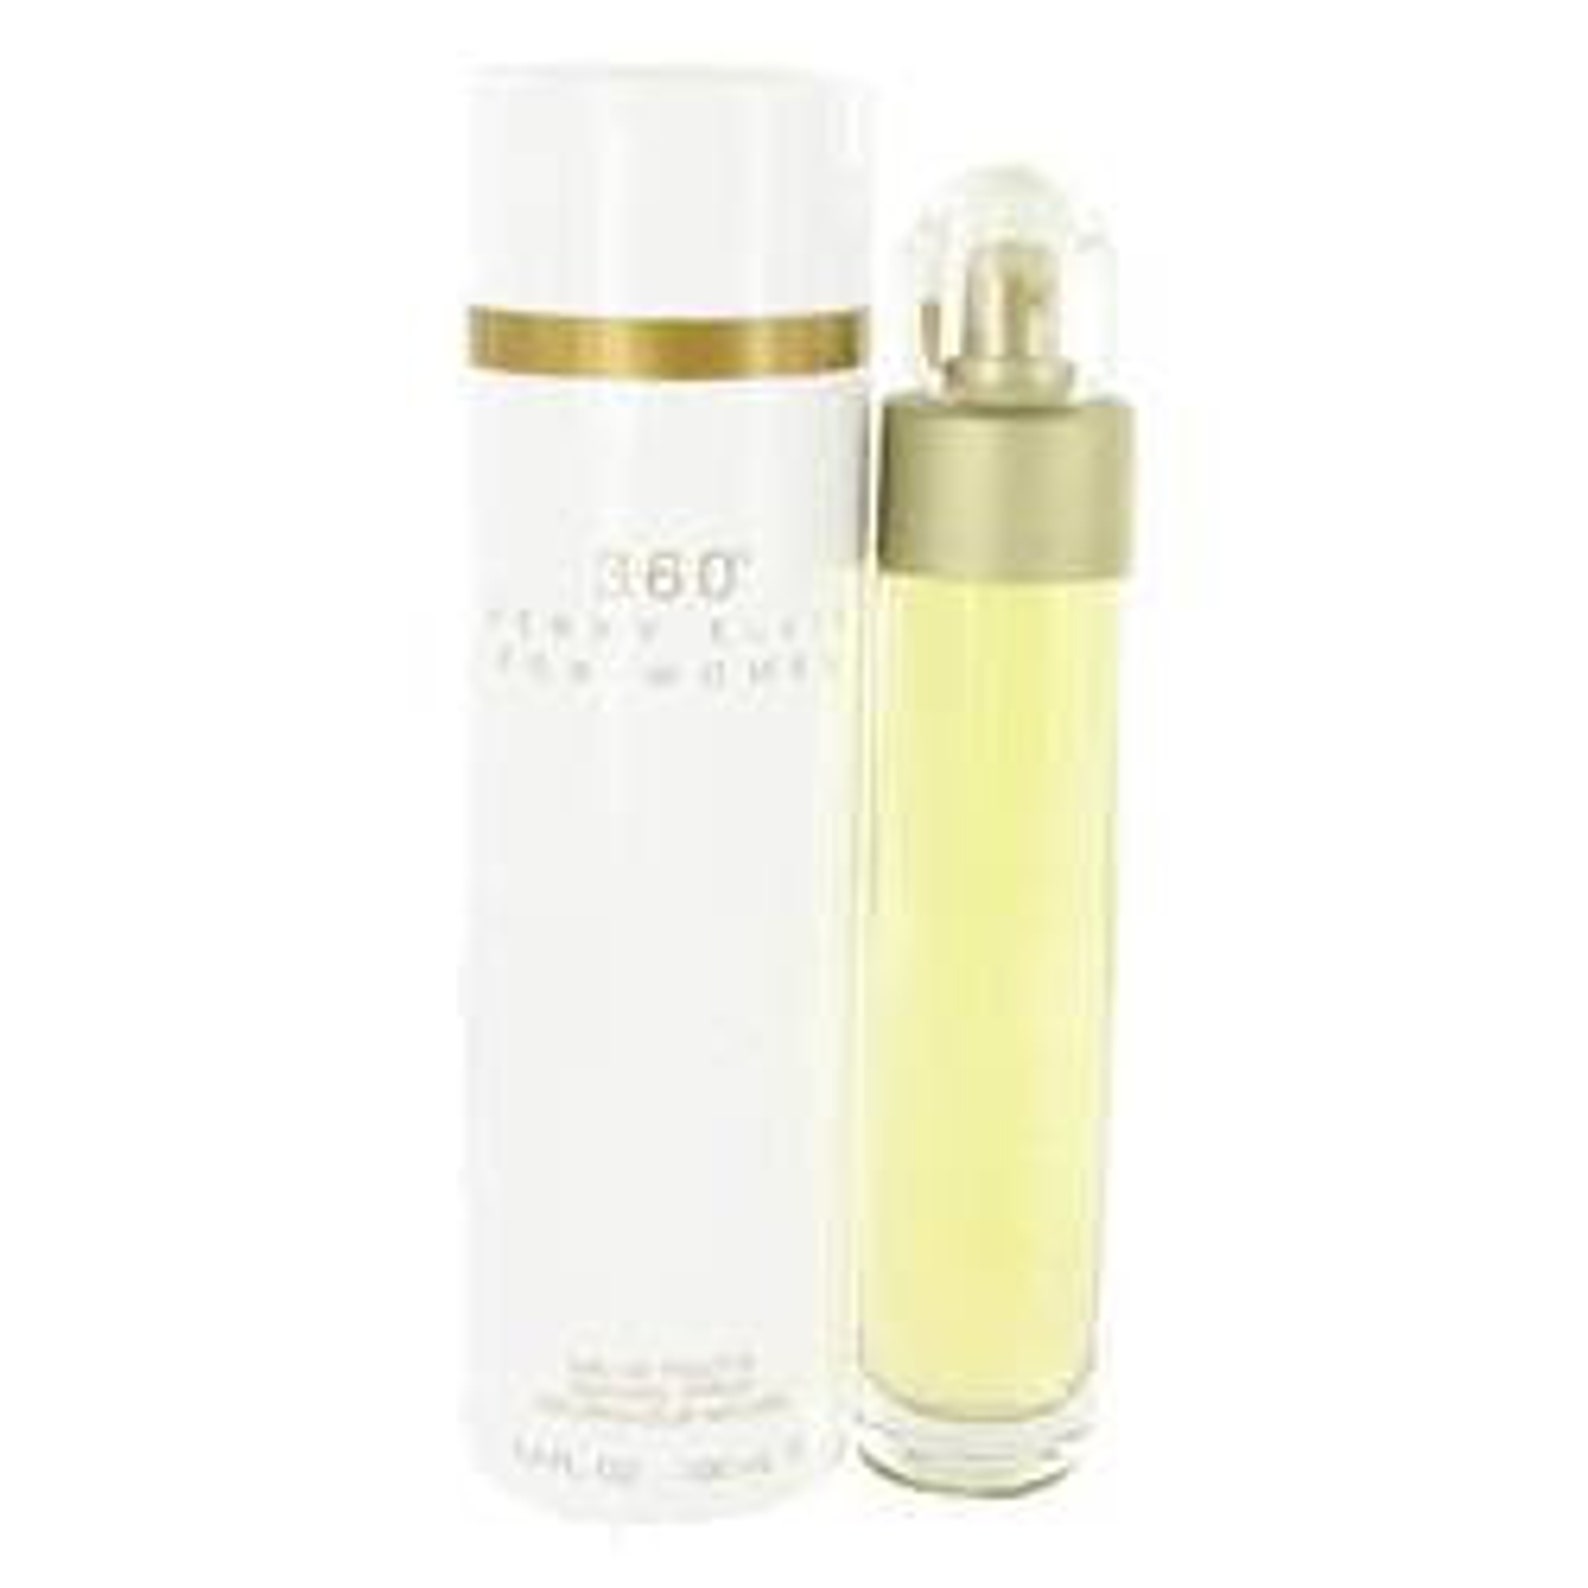 Perry Ellis 360 Perfume by Perry Ellis EDT Spray for Women 3.4 | Etsy